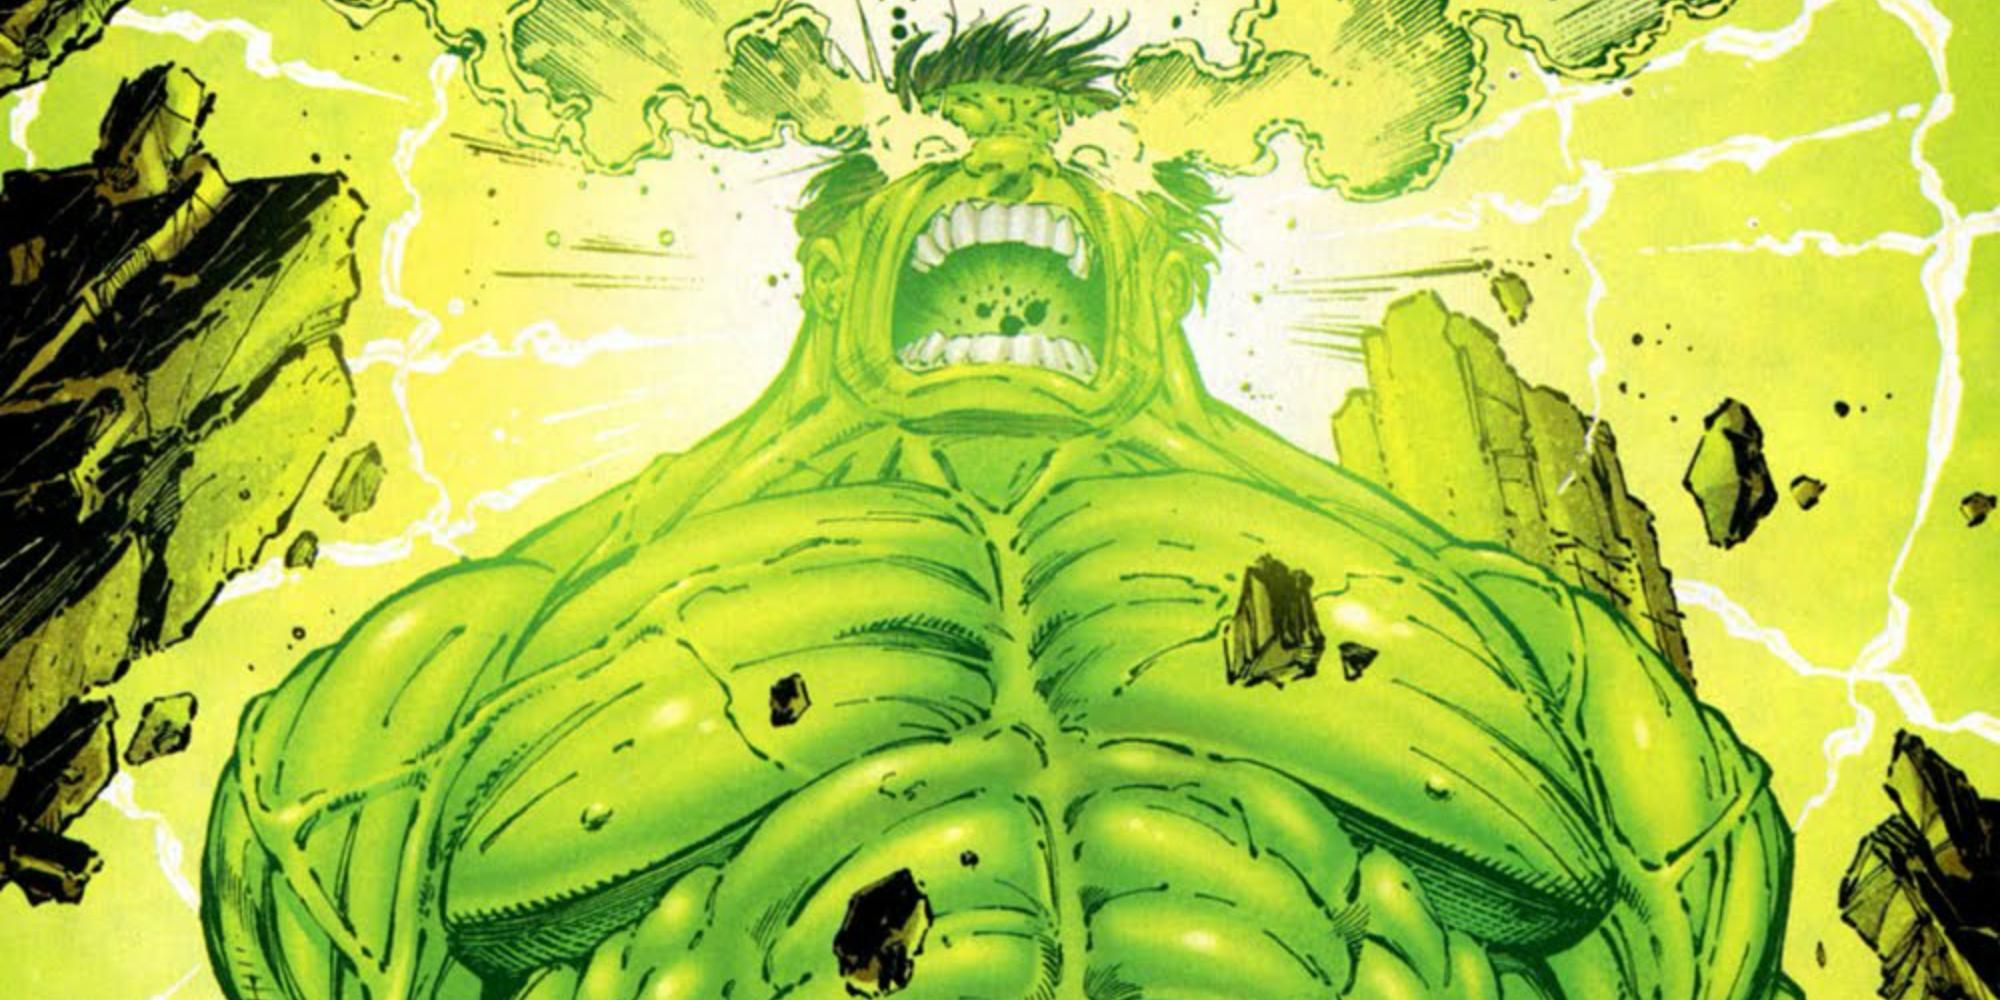 worldbreaker Hulk explodes with gamma energy